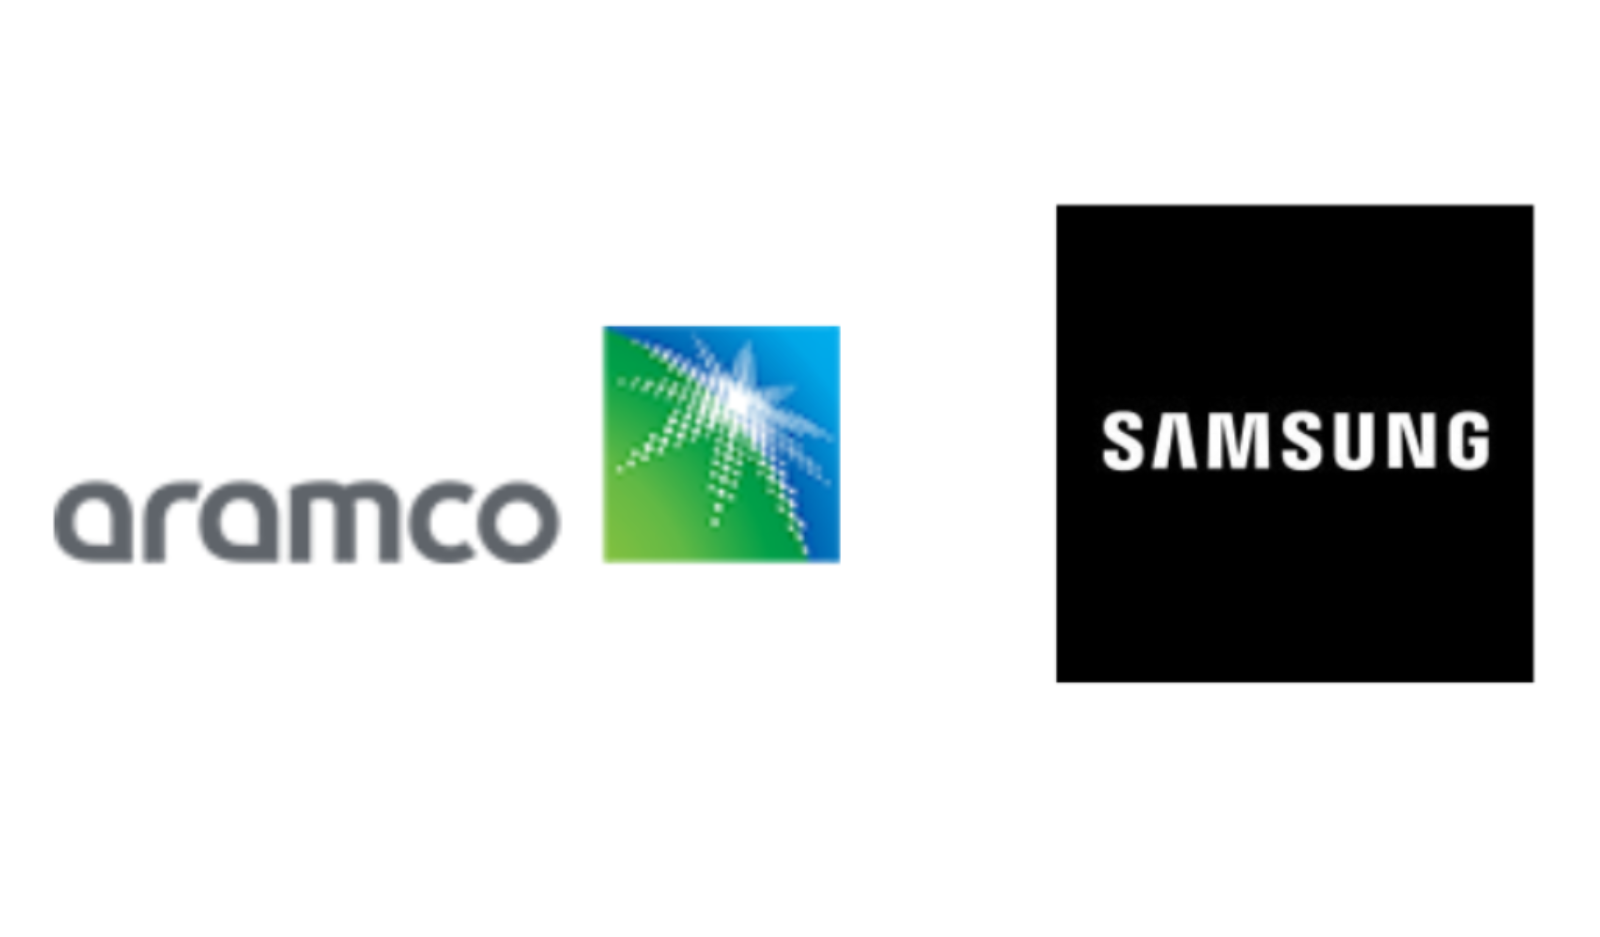 Saudi Aramco and Samsung Partner for 5G Ecosystem